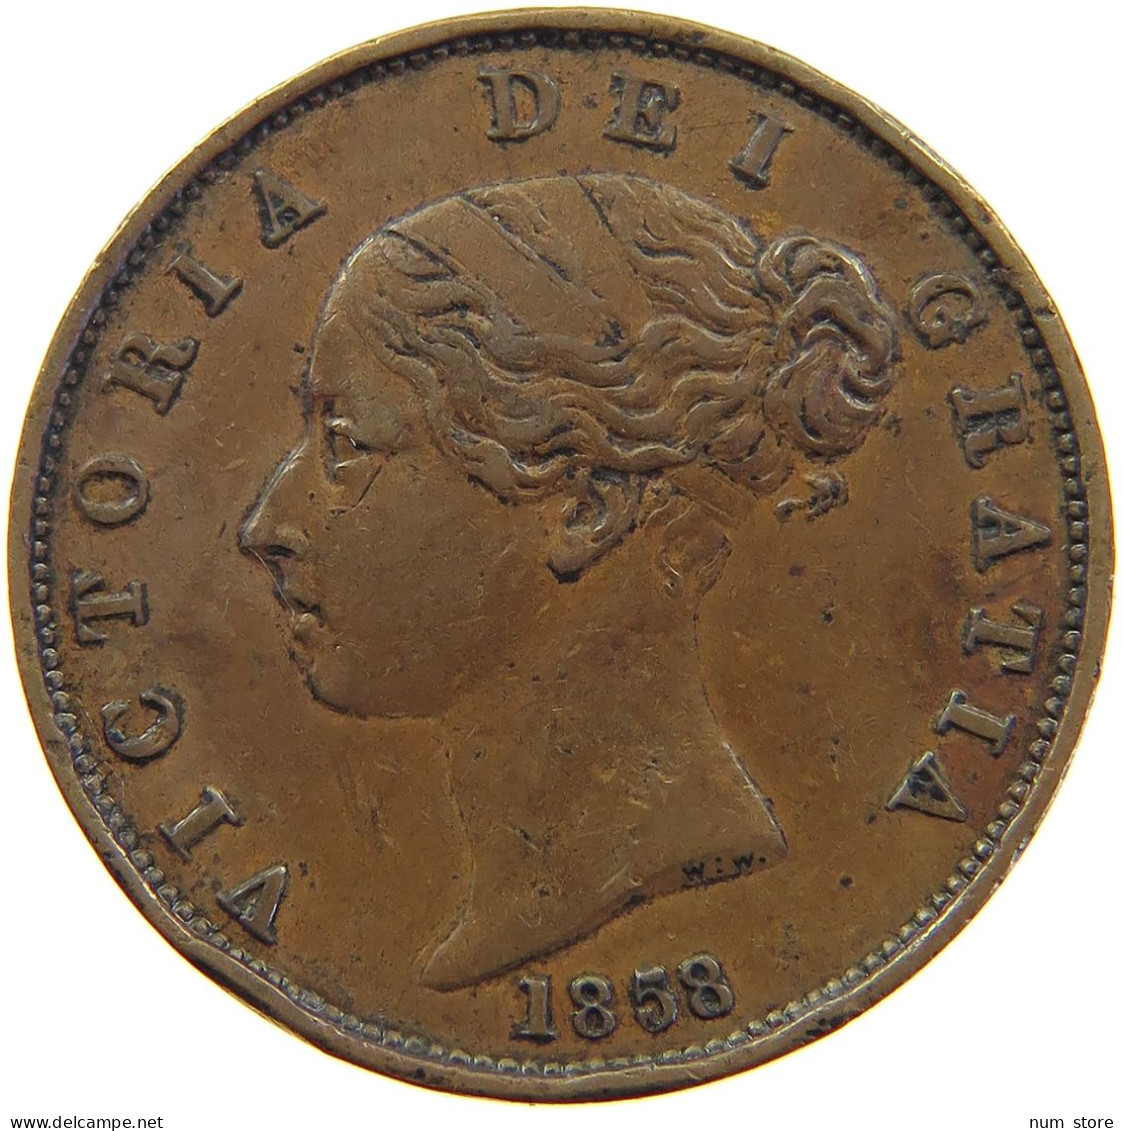 GREAT BRITAIN HALFPENNY 1858 Victoria 1837-1901 #s010 0285 - C. 1/2 Penny